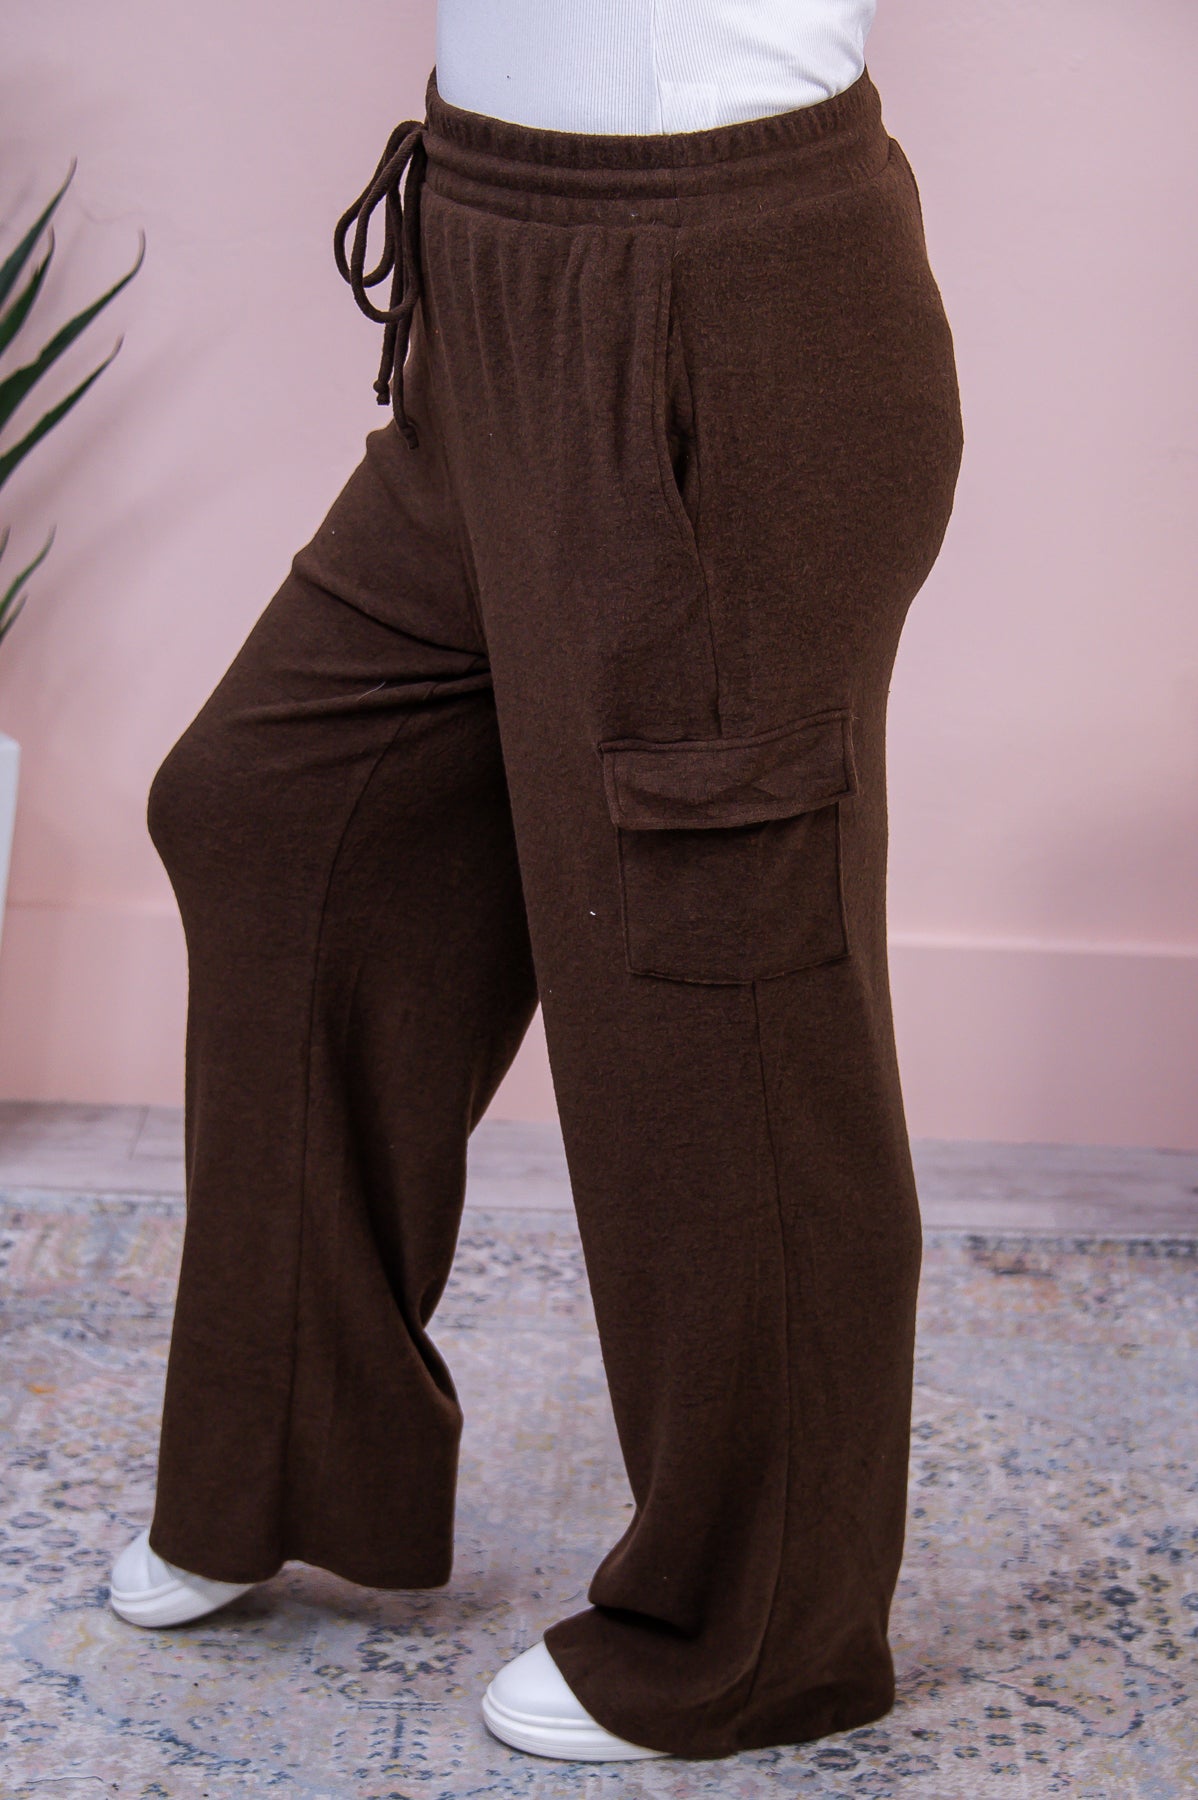 Easily Loved Brown Solid Pants - PNT1517BR